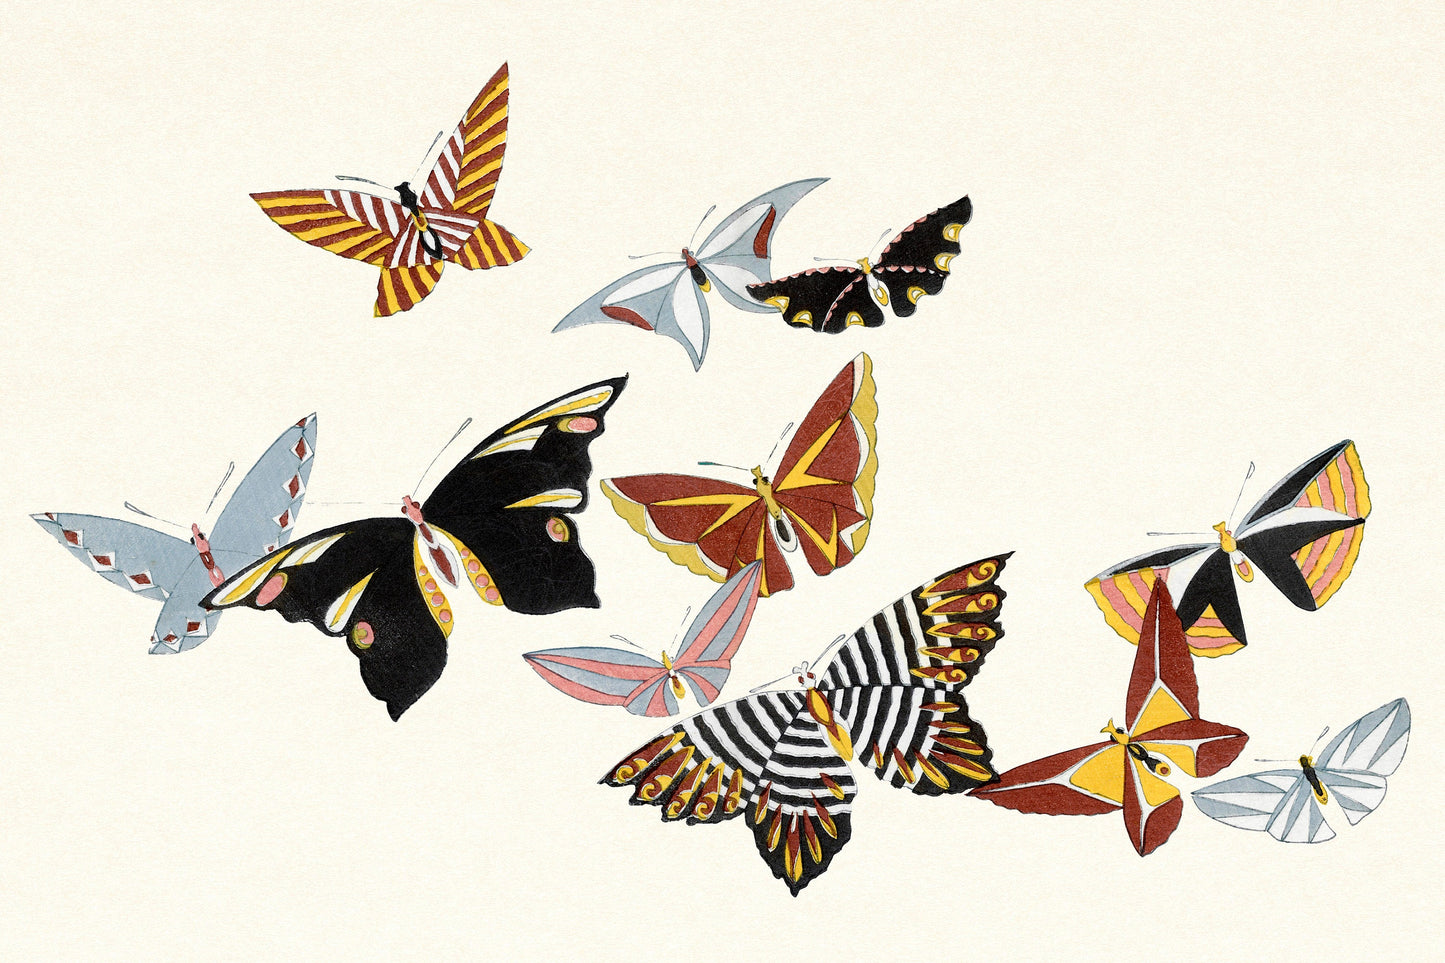 Kamisaka Sekka Butterfly Woodblock Prints [50 Images]